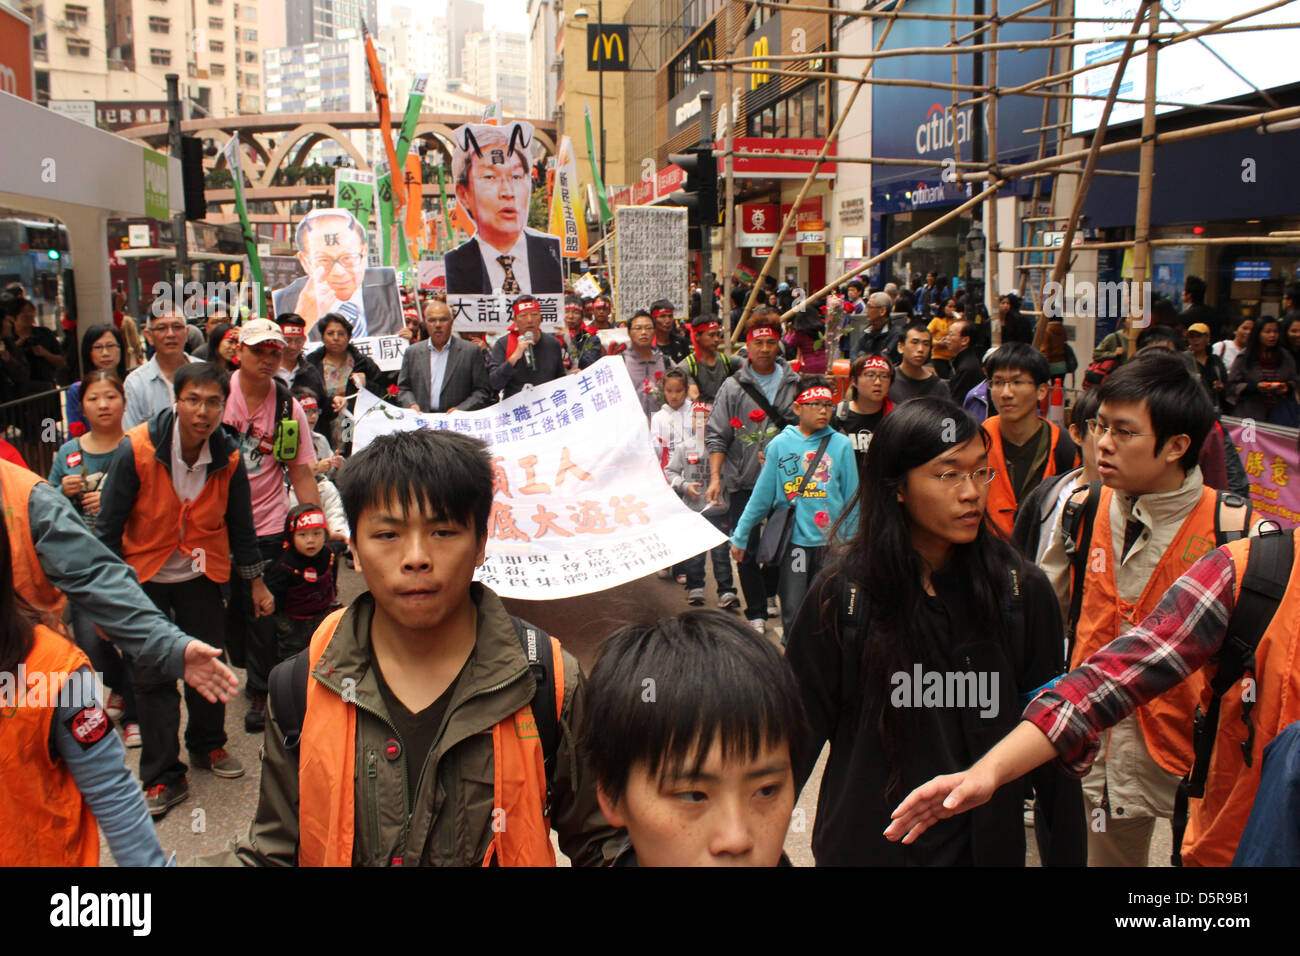 Causeway Bay, Hong Kong. 7th April 2013. Boy fronts march to support striking Hong Kong dockers. Credit: Robert SC Kemp/Alamy Live News Stock Photo